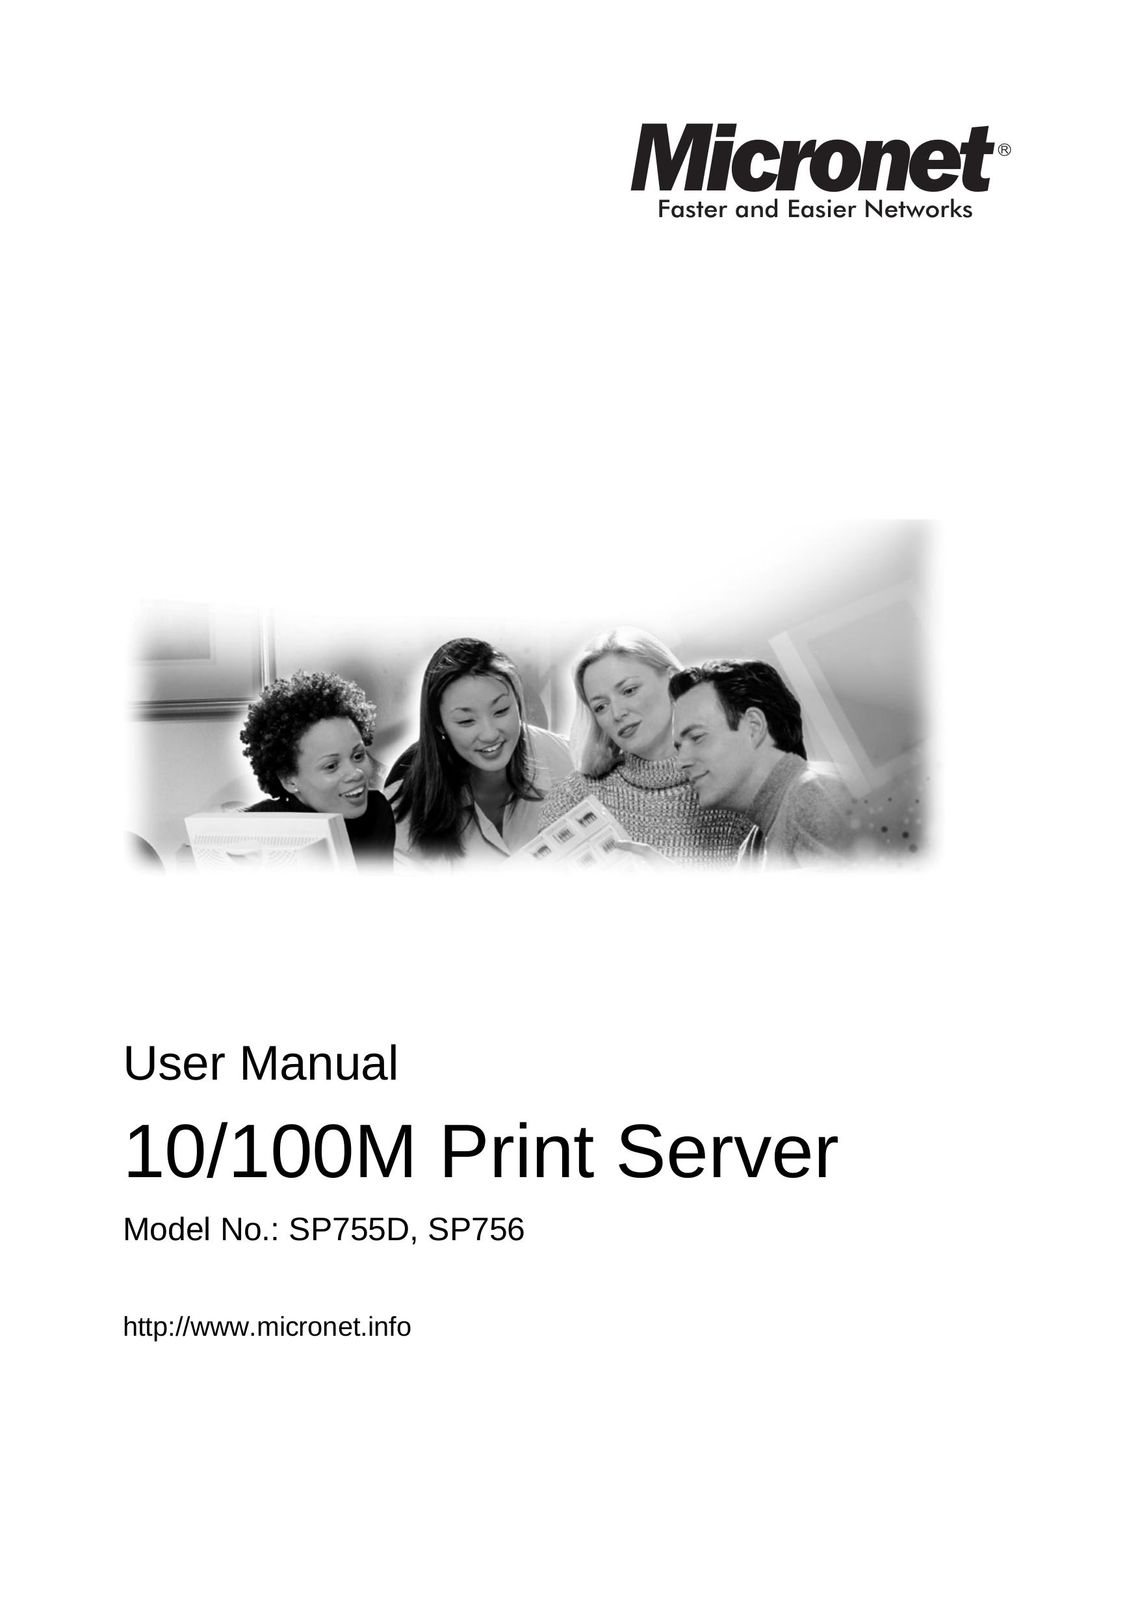 MicroNet Technology SP755D Printer User Manual